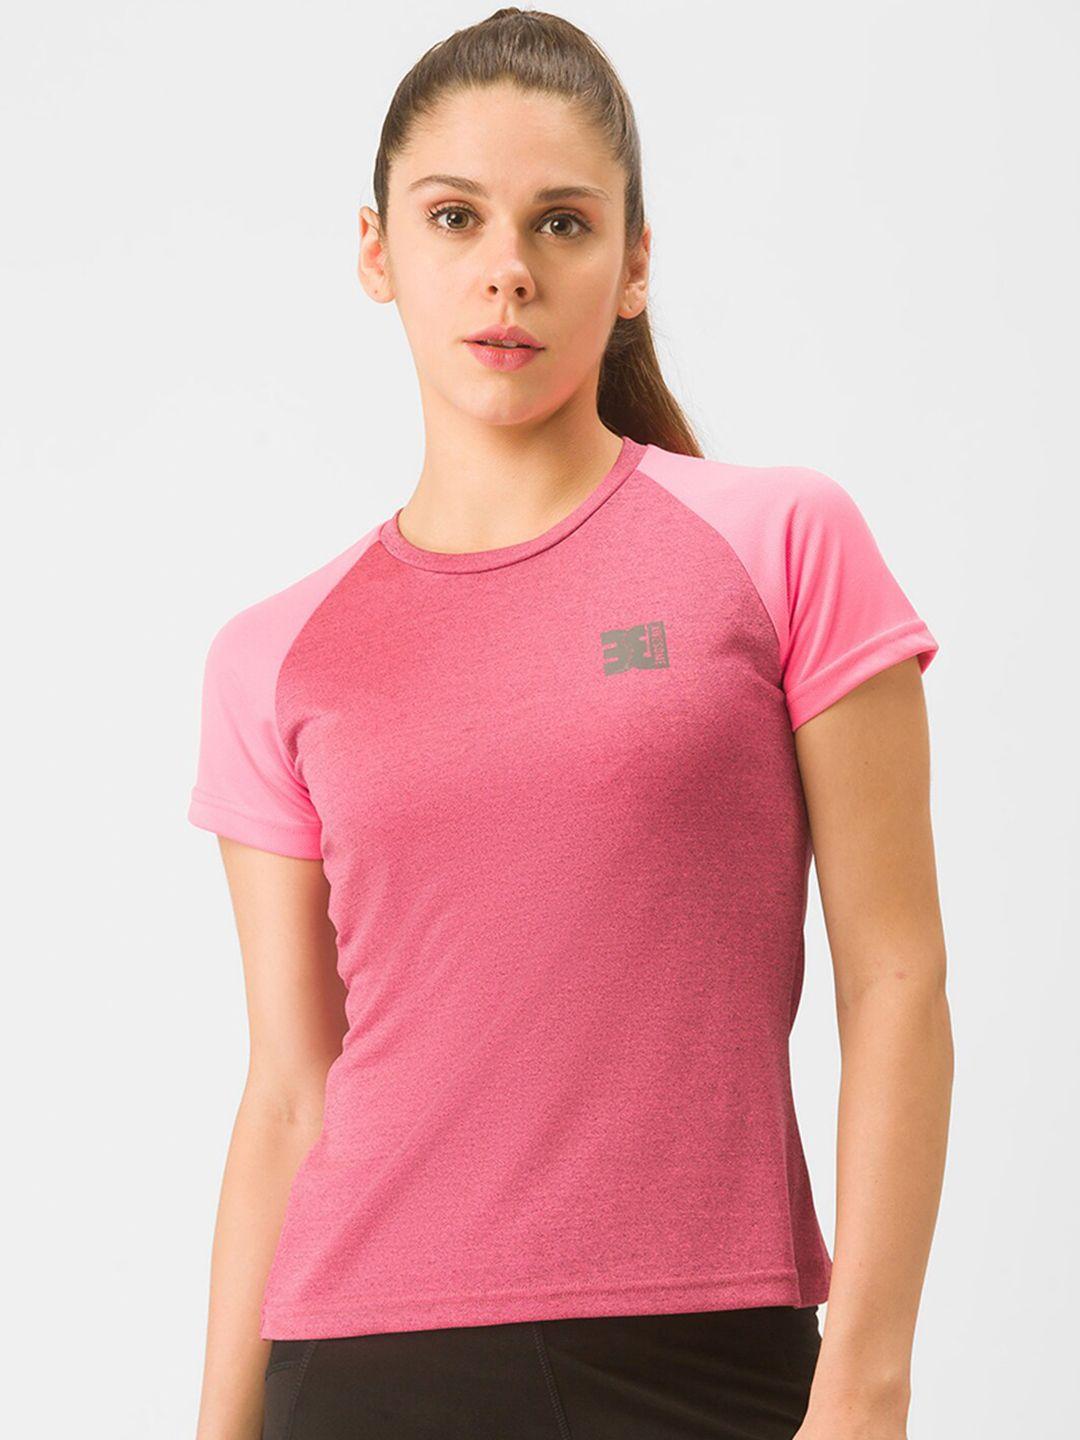 globus-women-pink-running-t-shirt